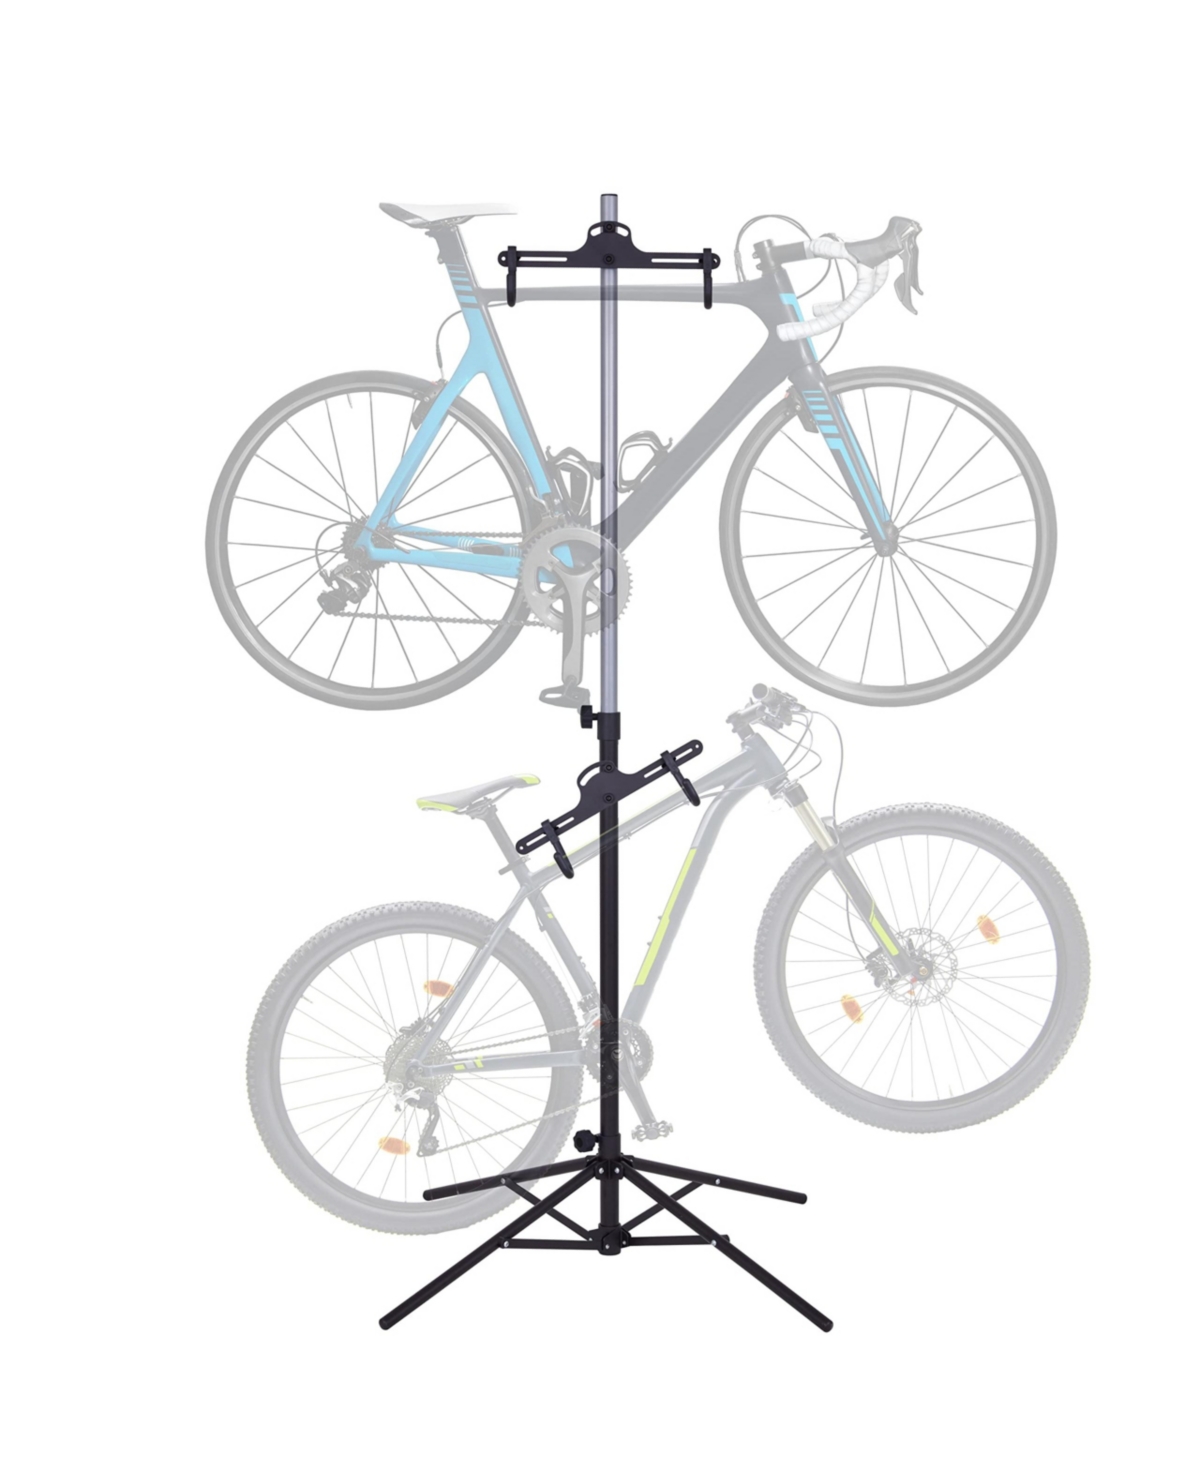 Adjustable Bike Rack, Freestanding & Foldable 2 Bike Hanger - Black